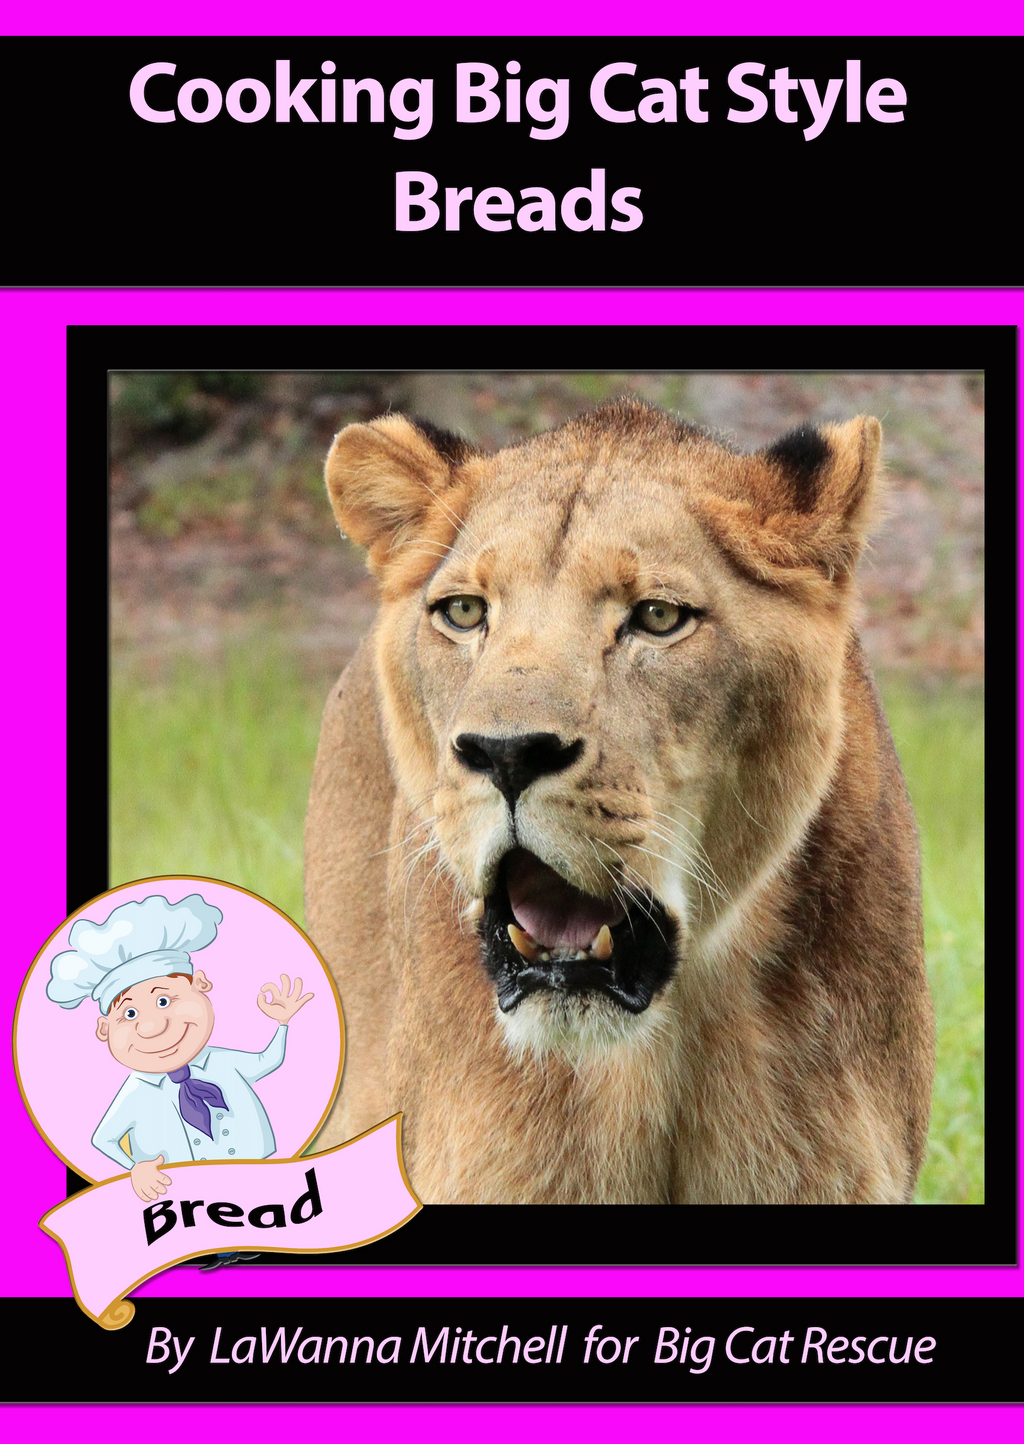 Download - Big Cat Rescue Bread Cookbook